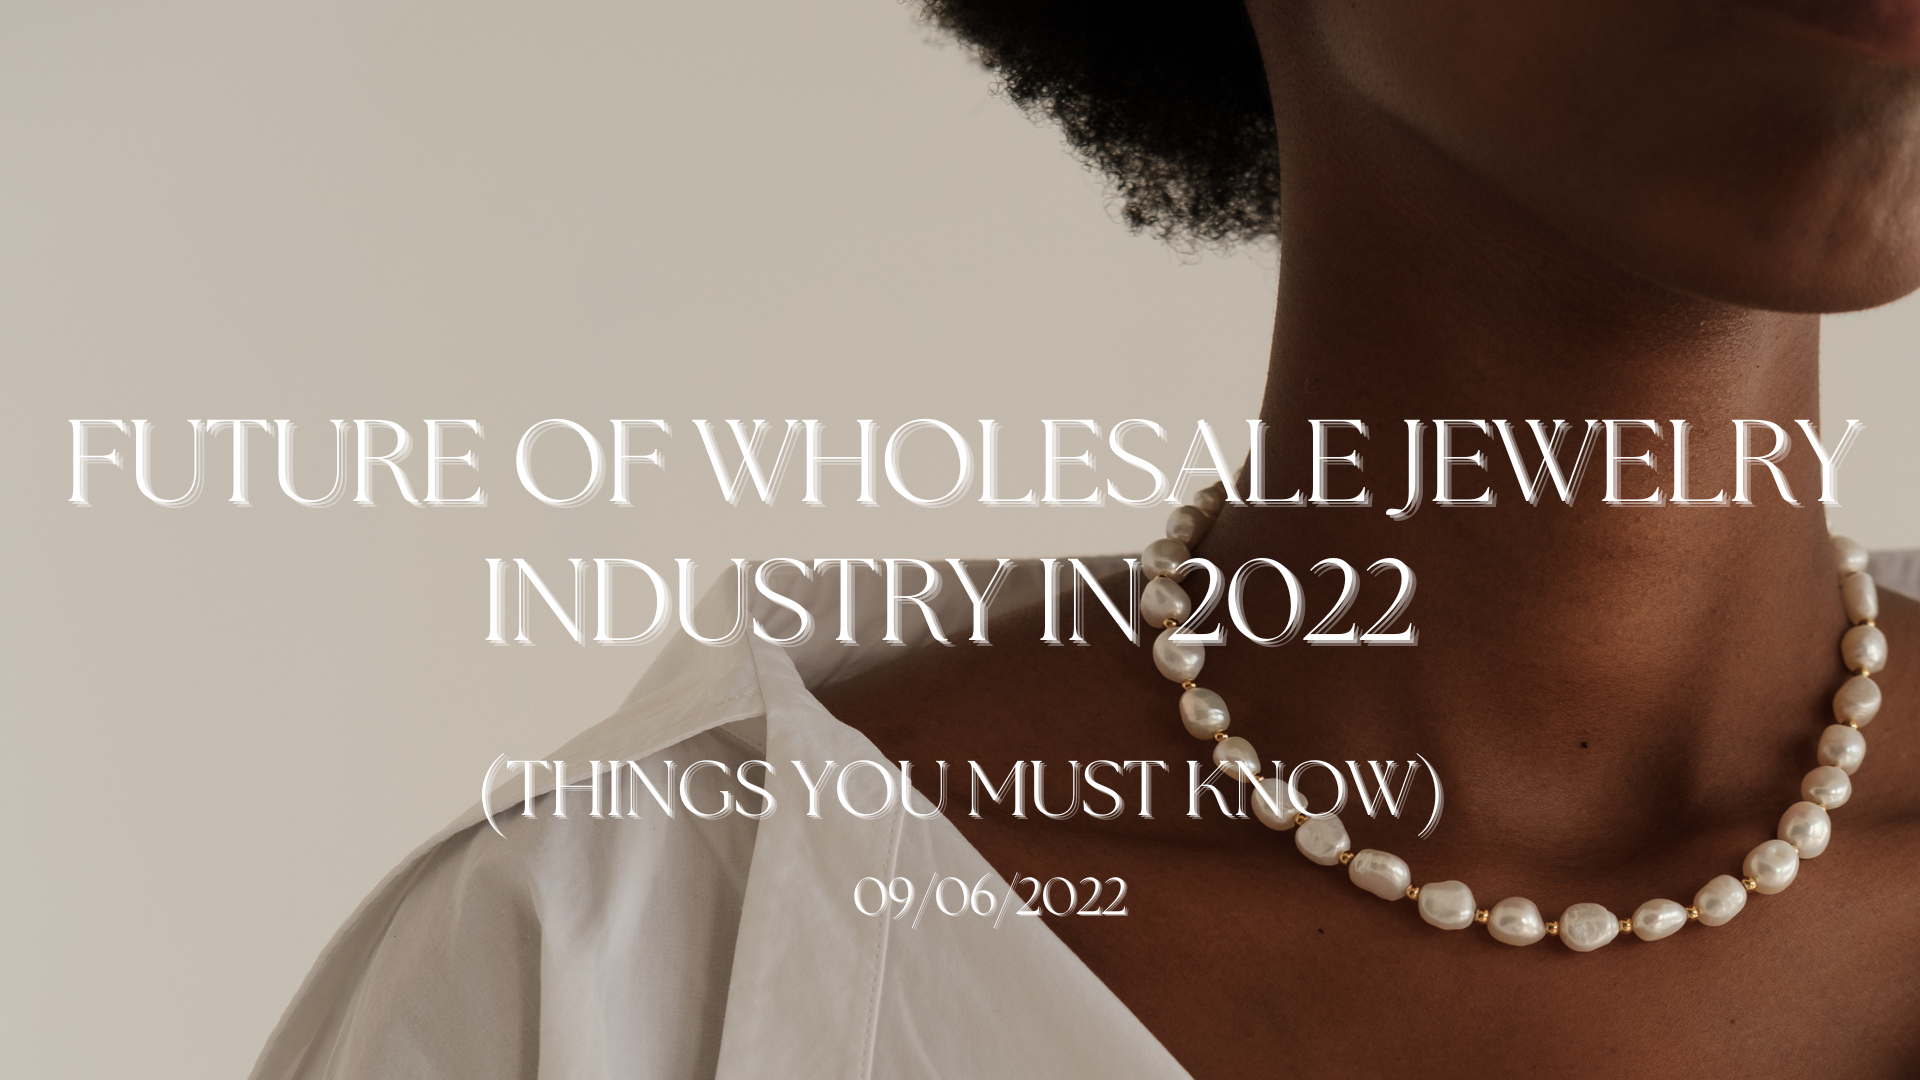 Wholesale jewelry industry